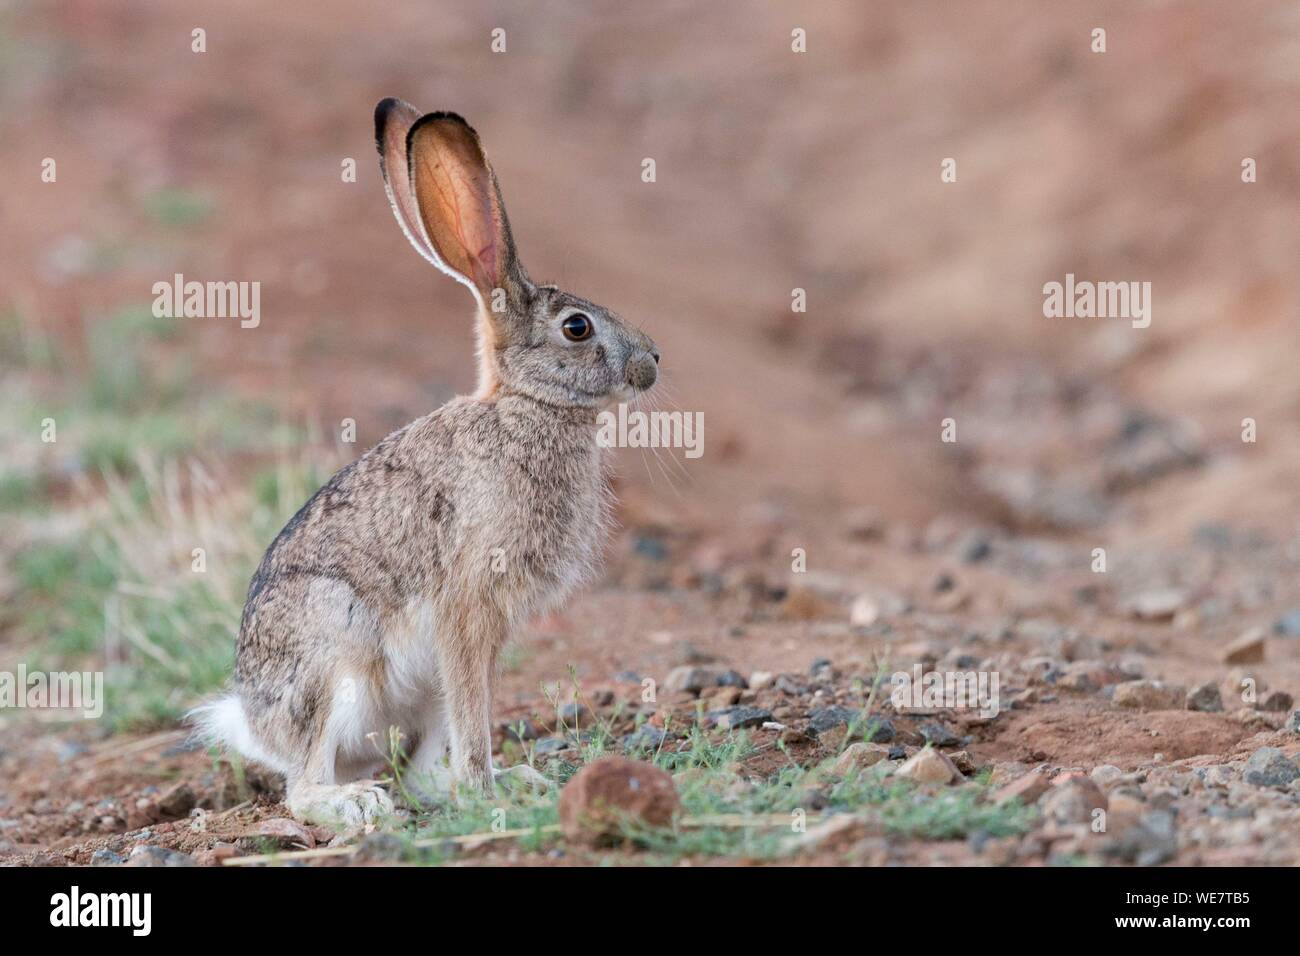 South Africa, Private reserve, Scrub hare (Lepus saxatilis) Stock Photo